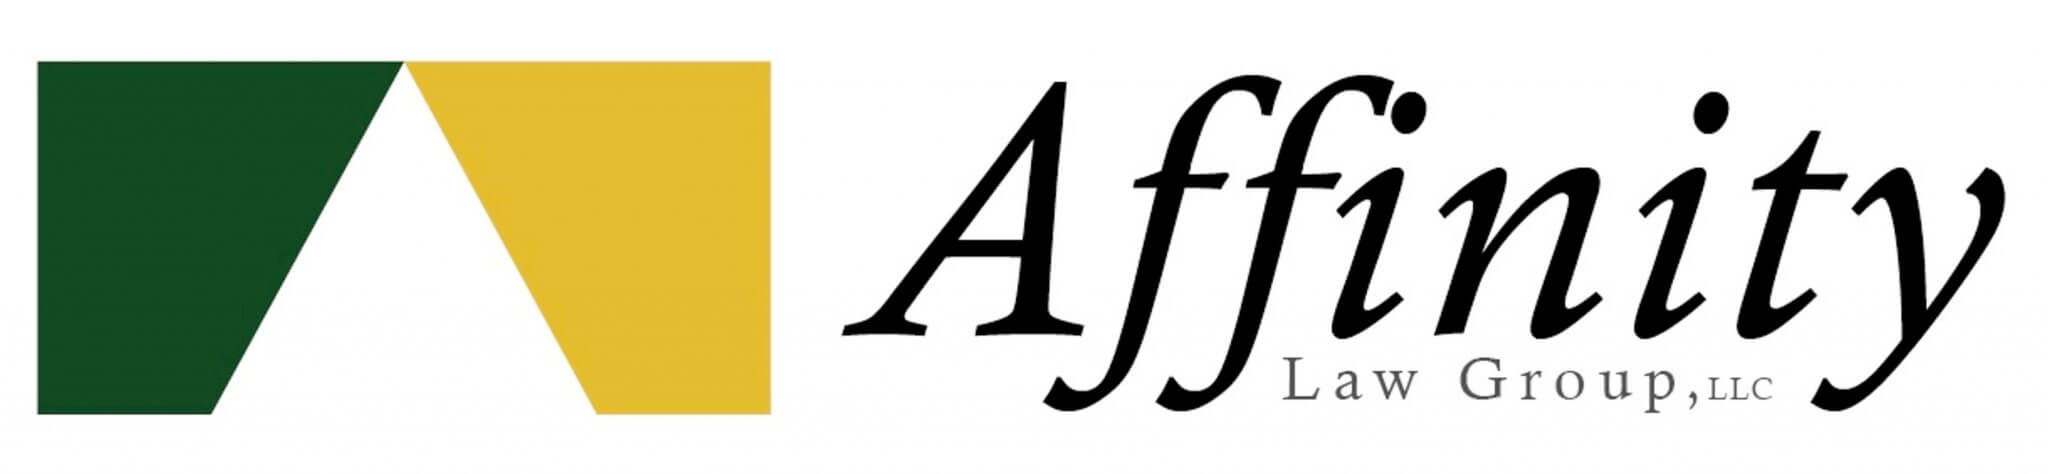 Affinity-Law-Group-logo